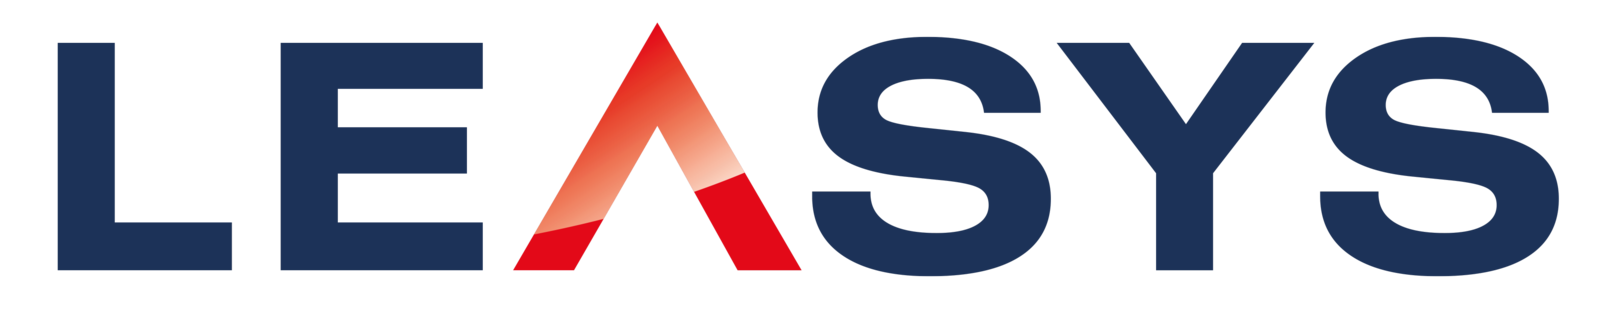 image of Leasys logo